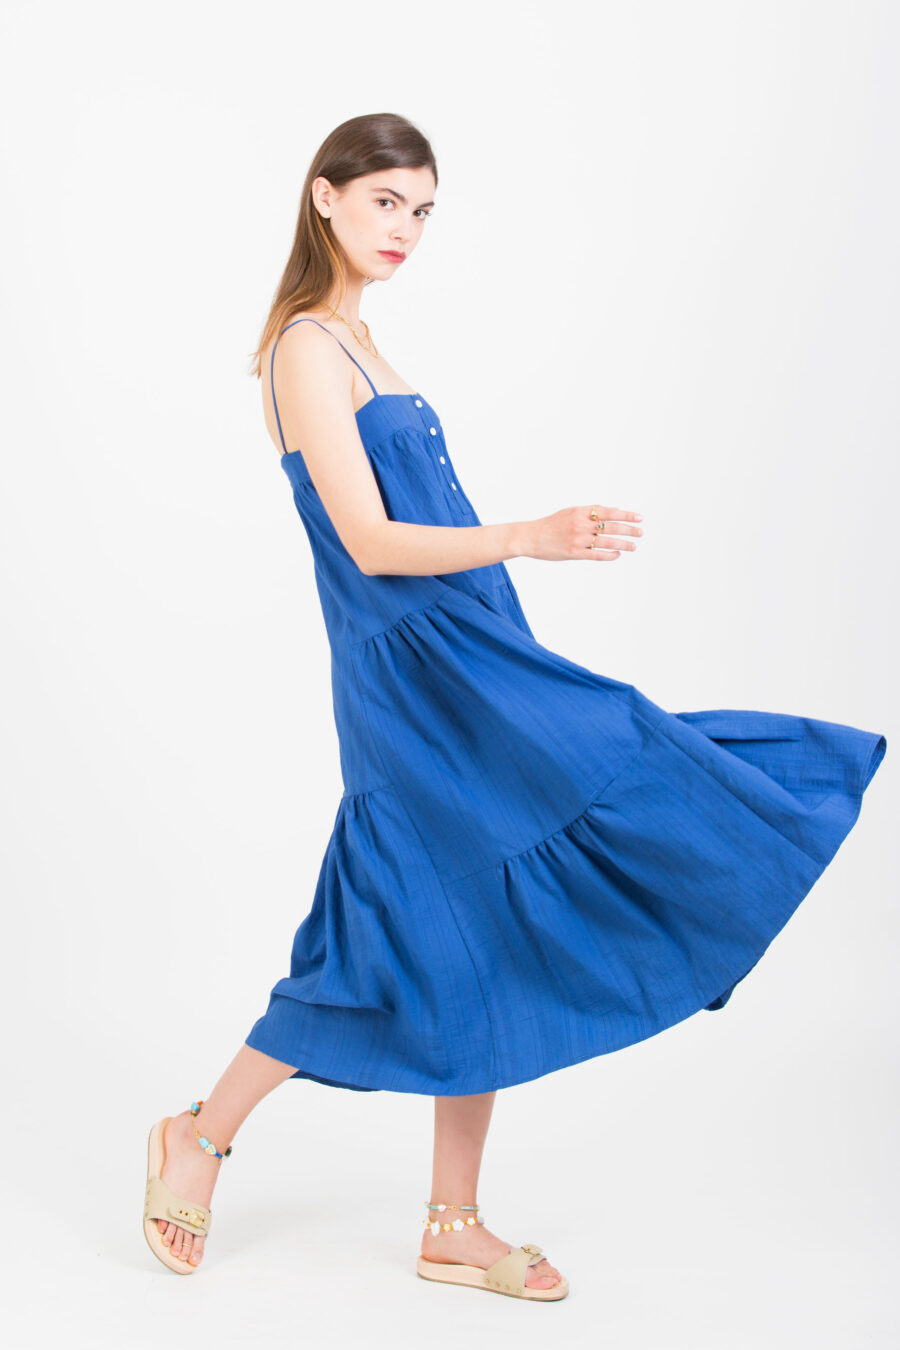 Polly Blue Dress Uniforme Athens